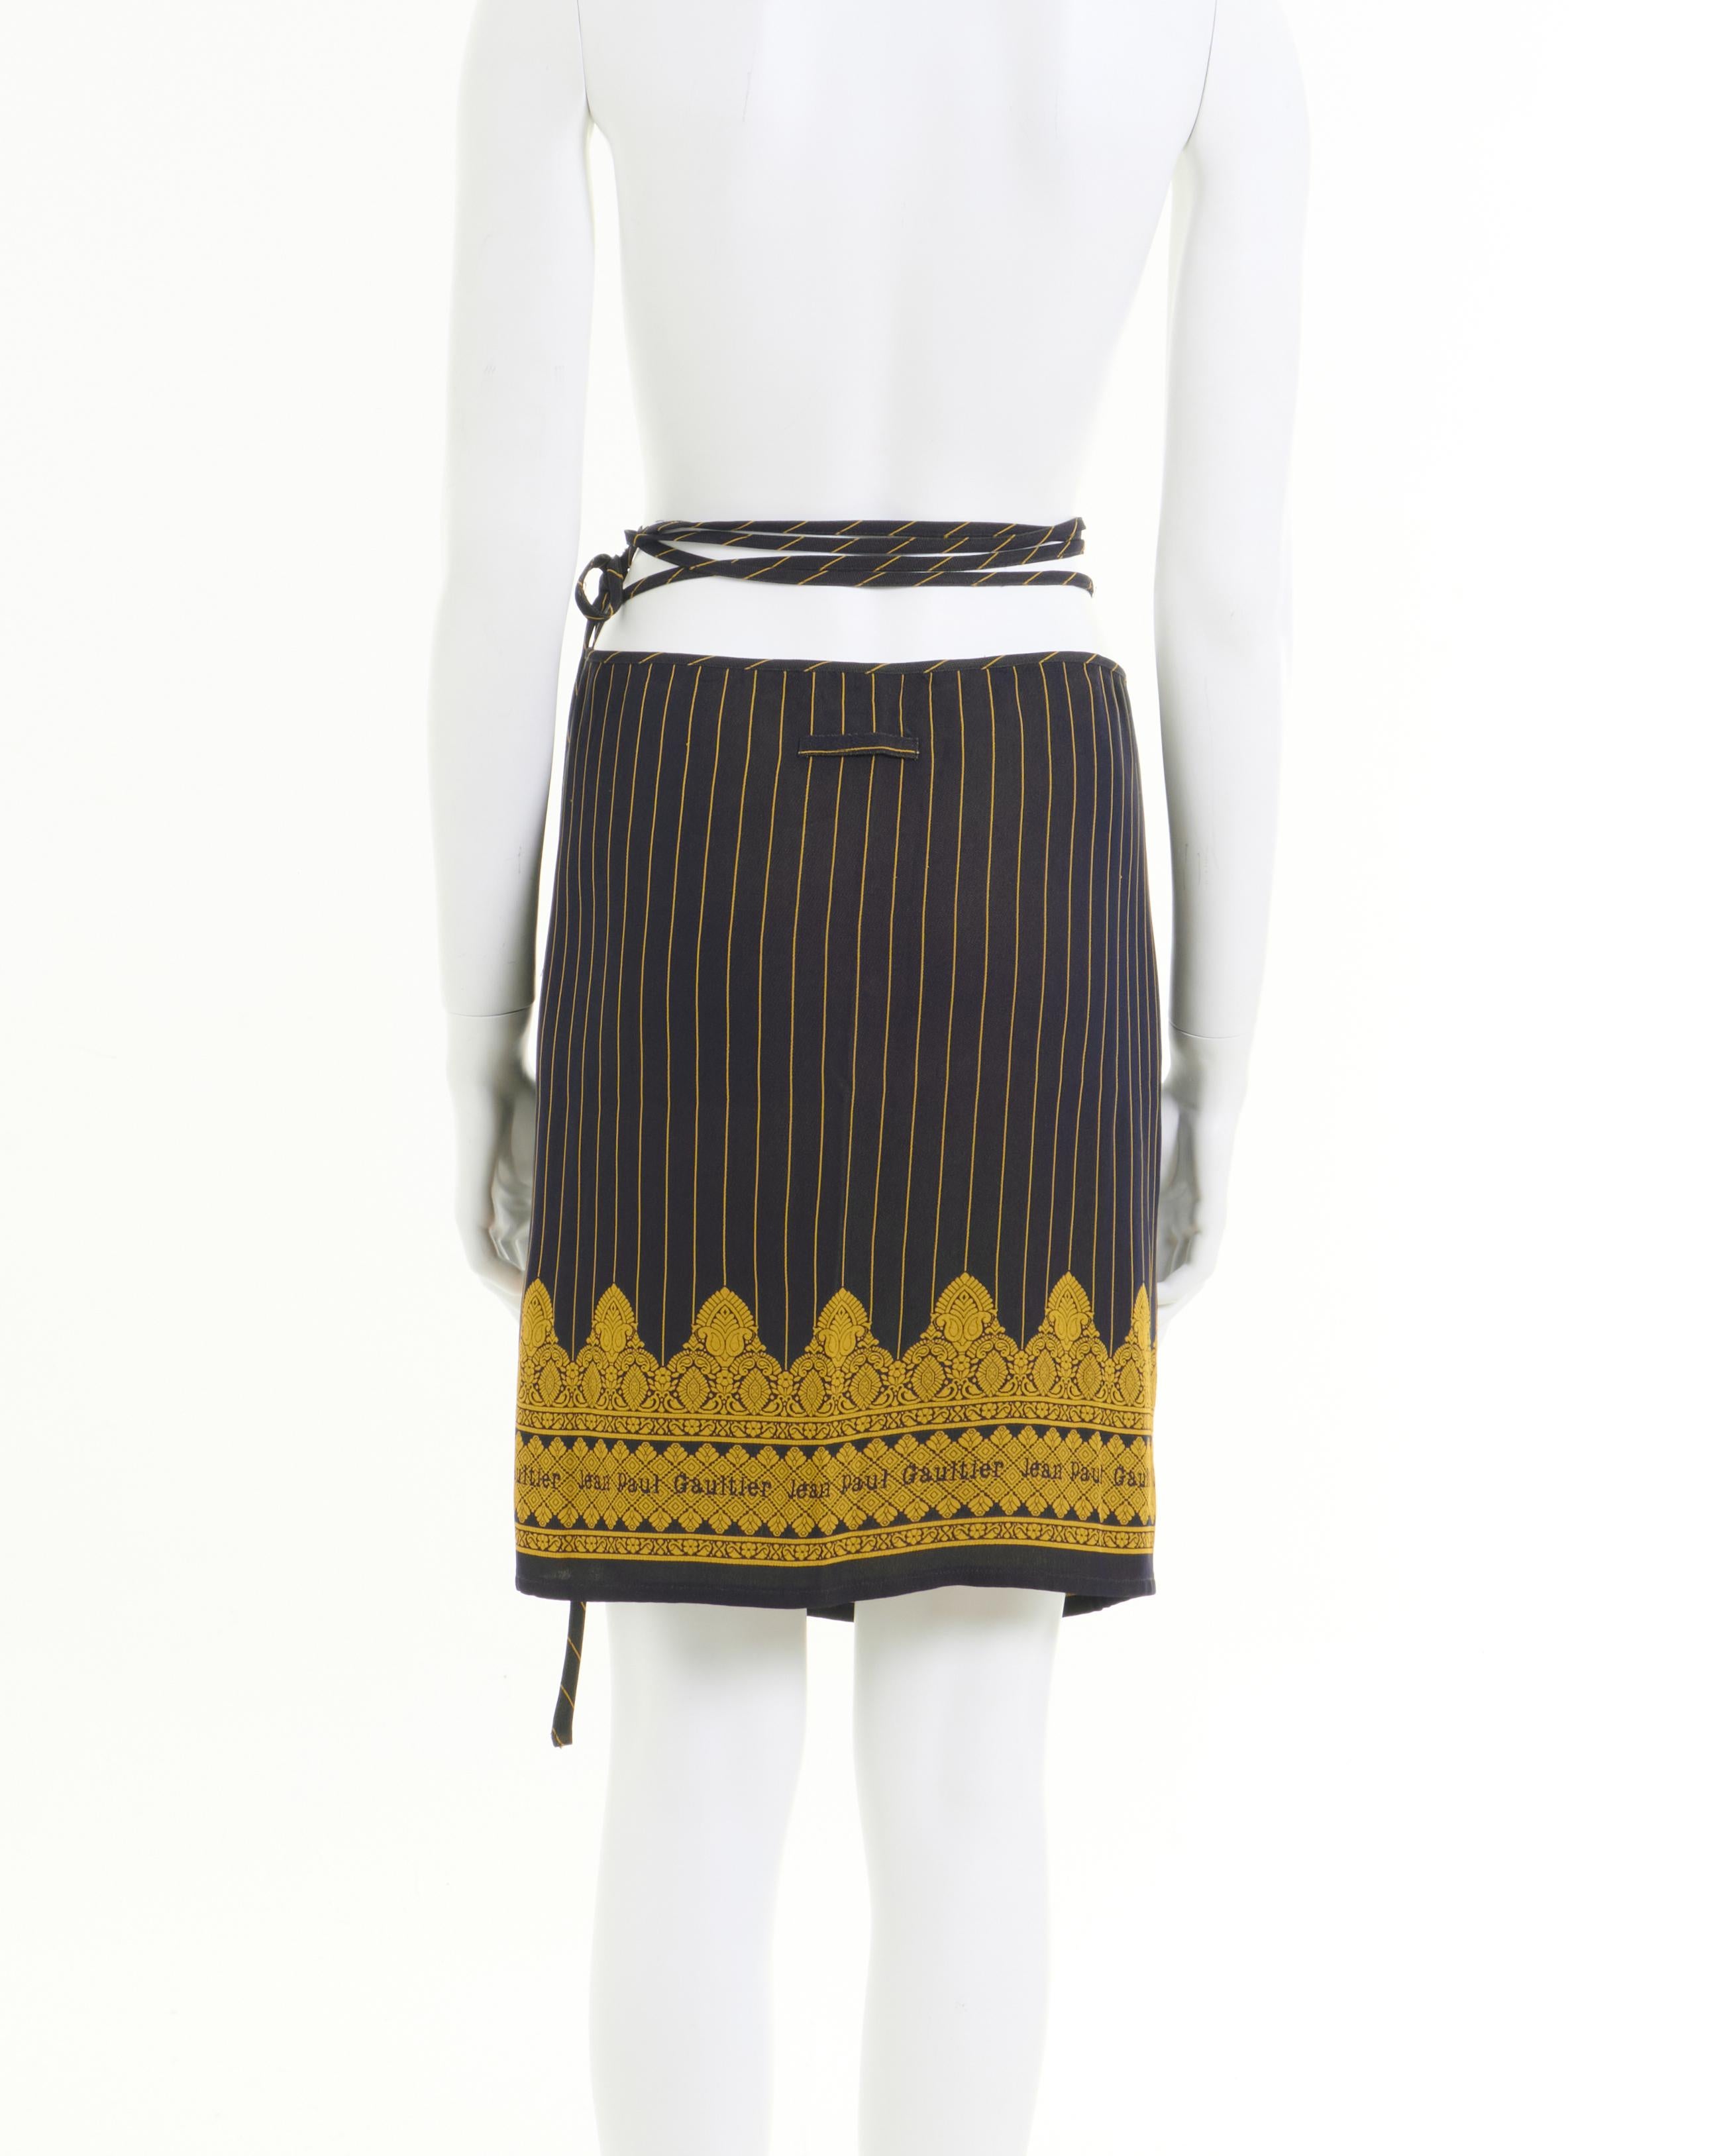 Men's Jean Paul Gaultier S/S 1997 Pinstripe Jacquard black wrap skirt For Sale